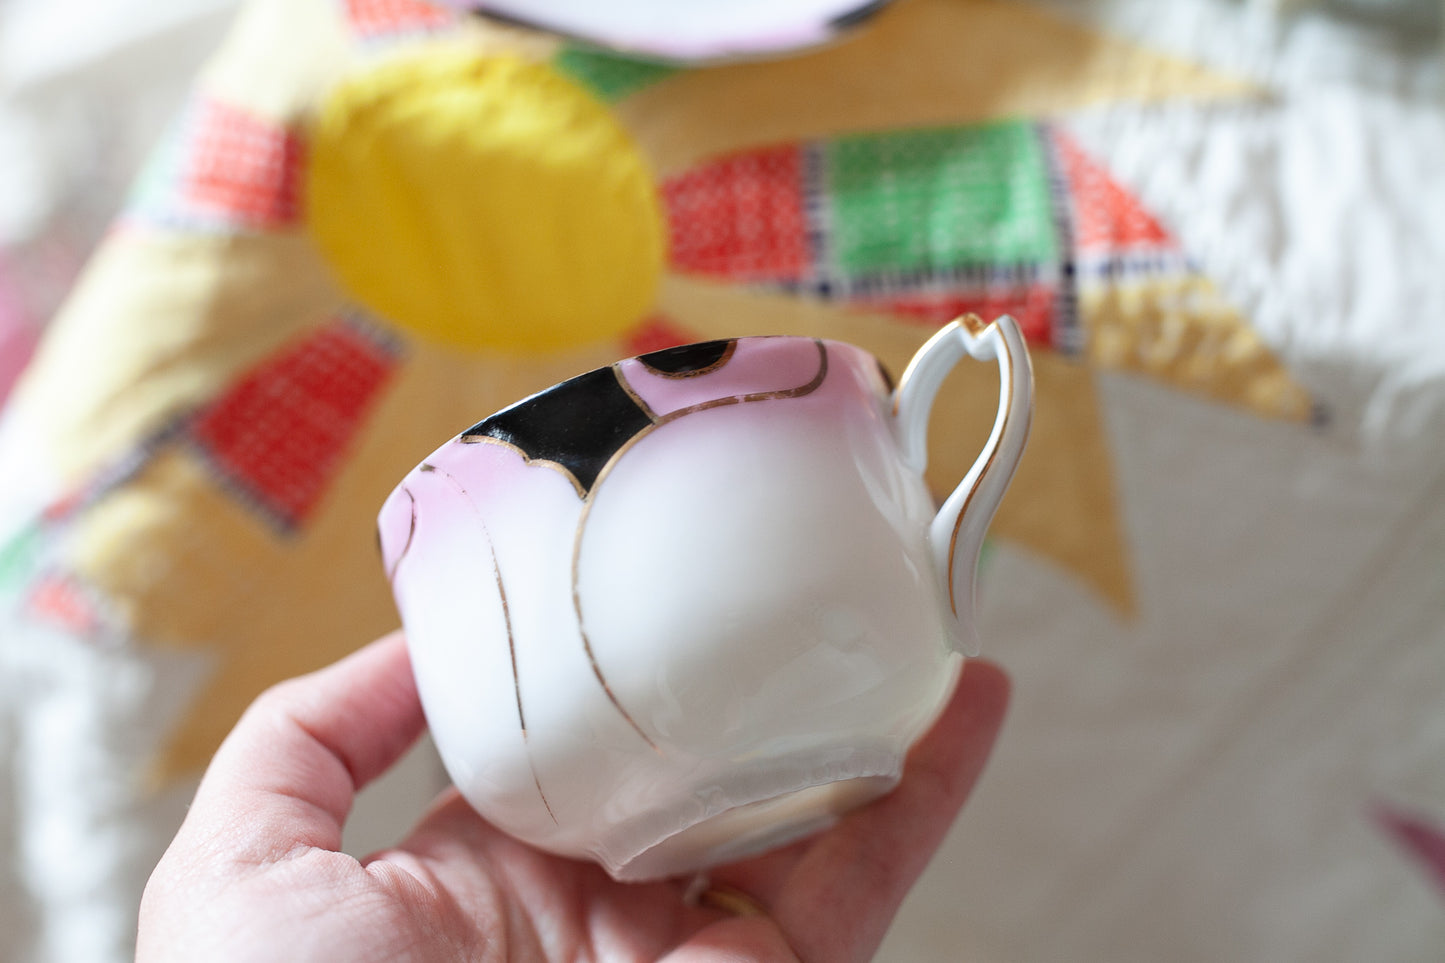 Vintage Teacup - Pink and Black - Ucagco Made in Japan